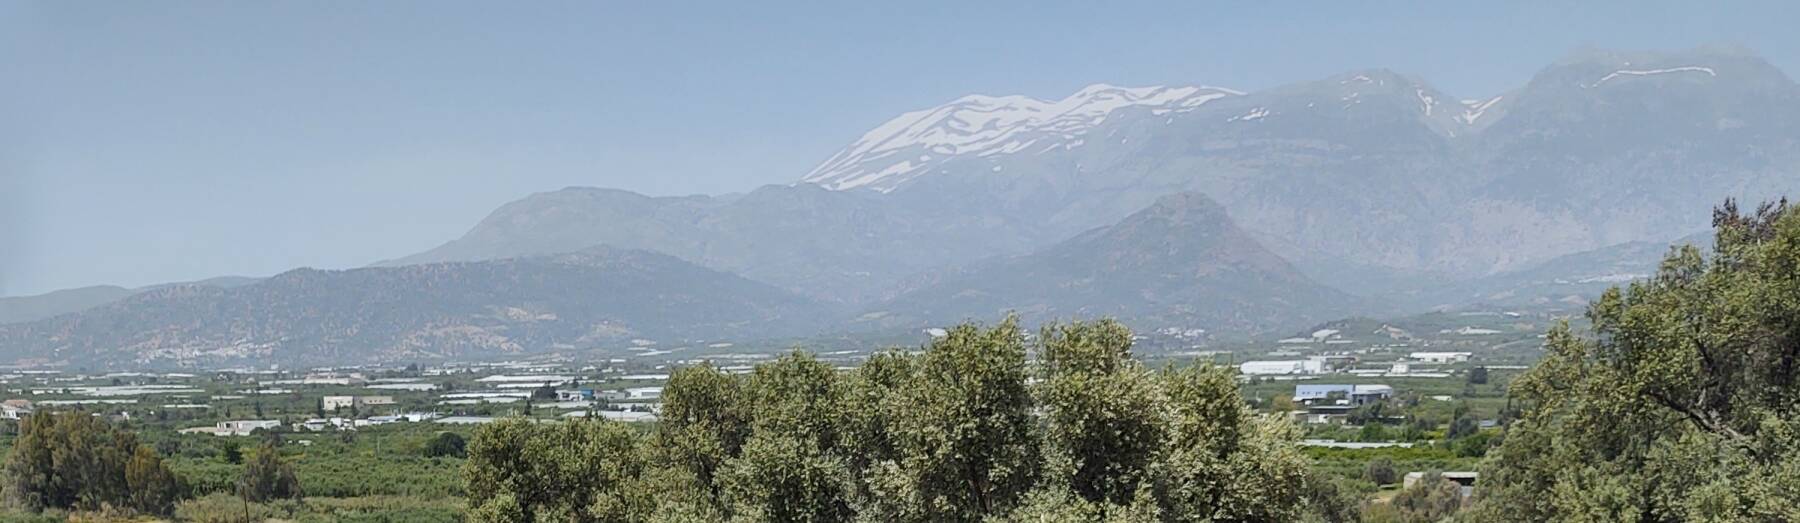 The Psiloritis massif and Mount Ida, the highest point in Crete, above the Minoan villa at Agia Triada.